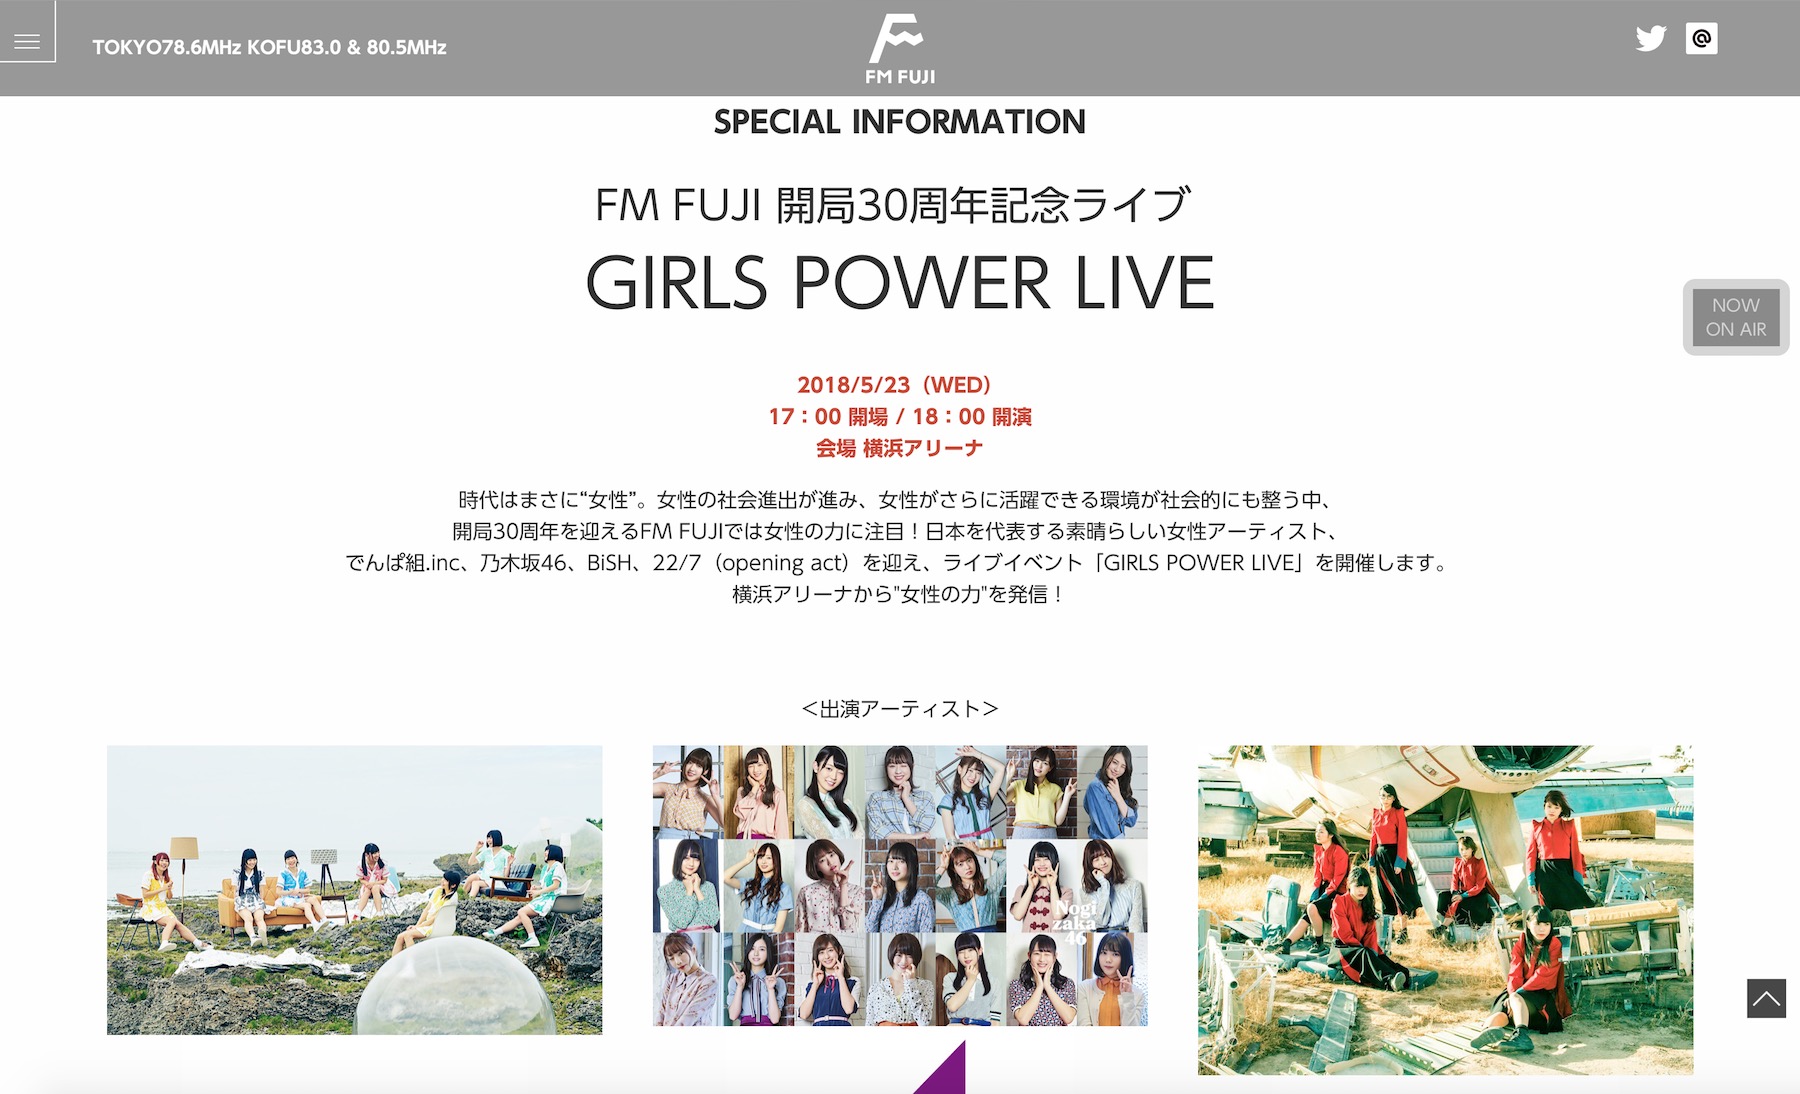 FM FUJI 開局30周年記念ライブ GIRLS POWER LIVE